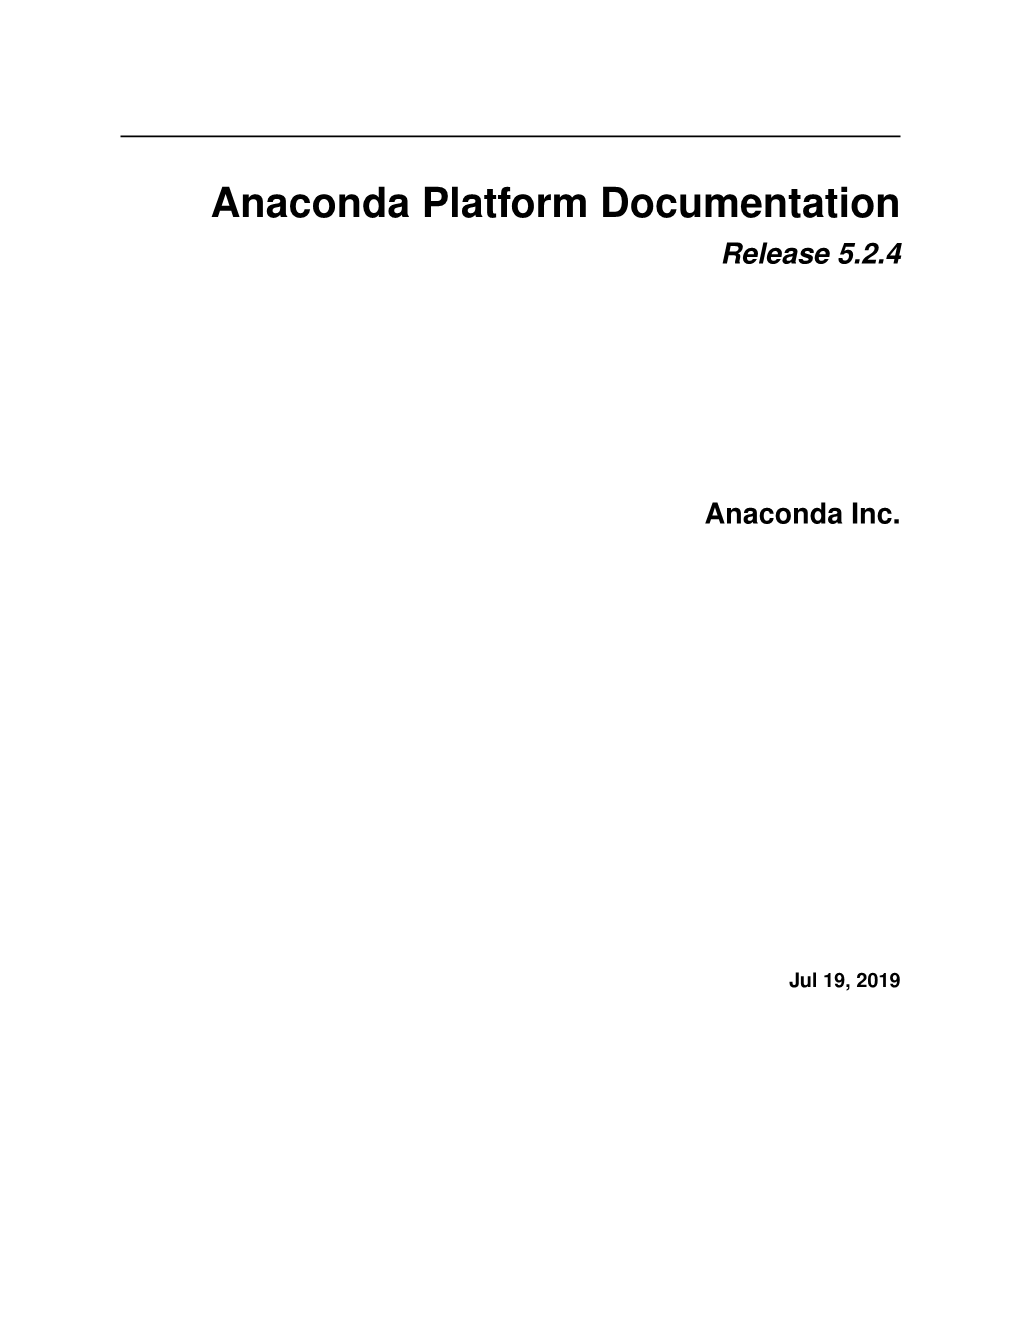 Anaconda Platform Documentation Release 5.2.4